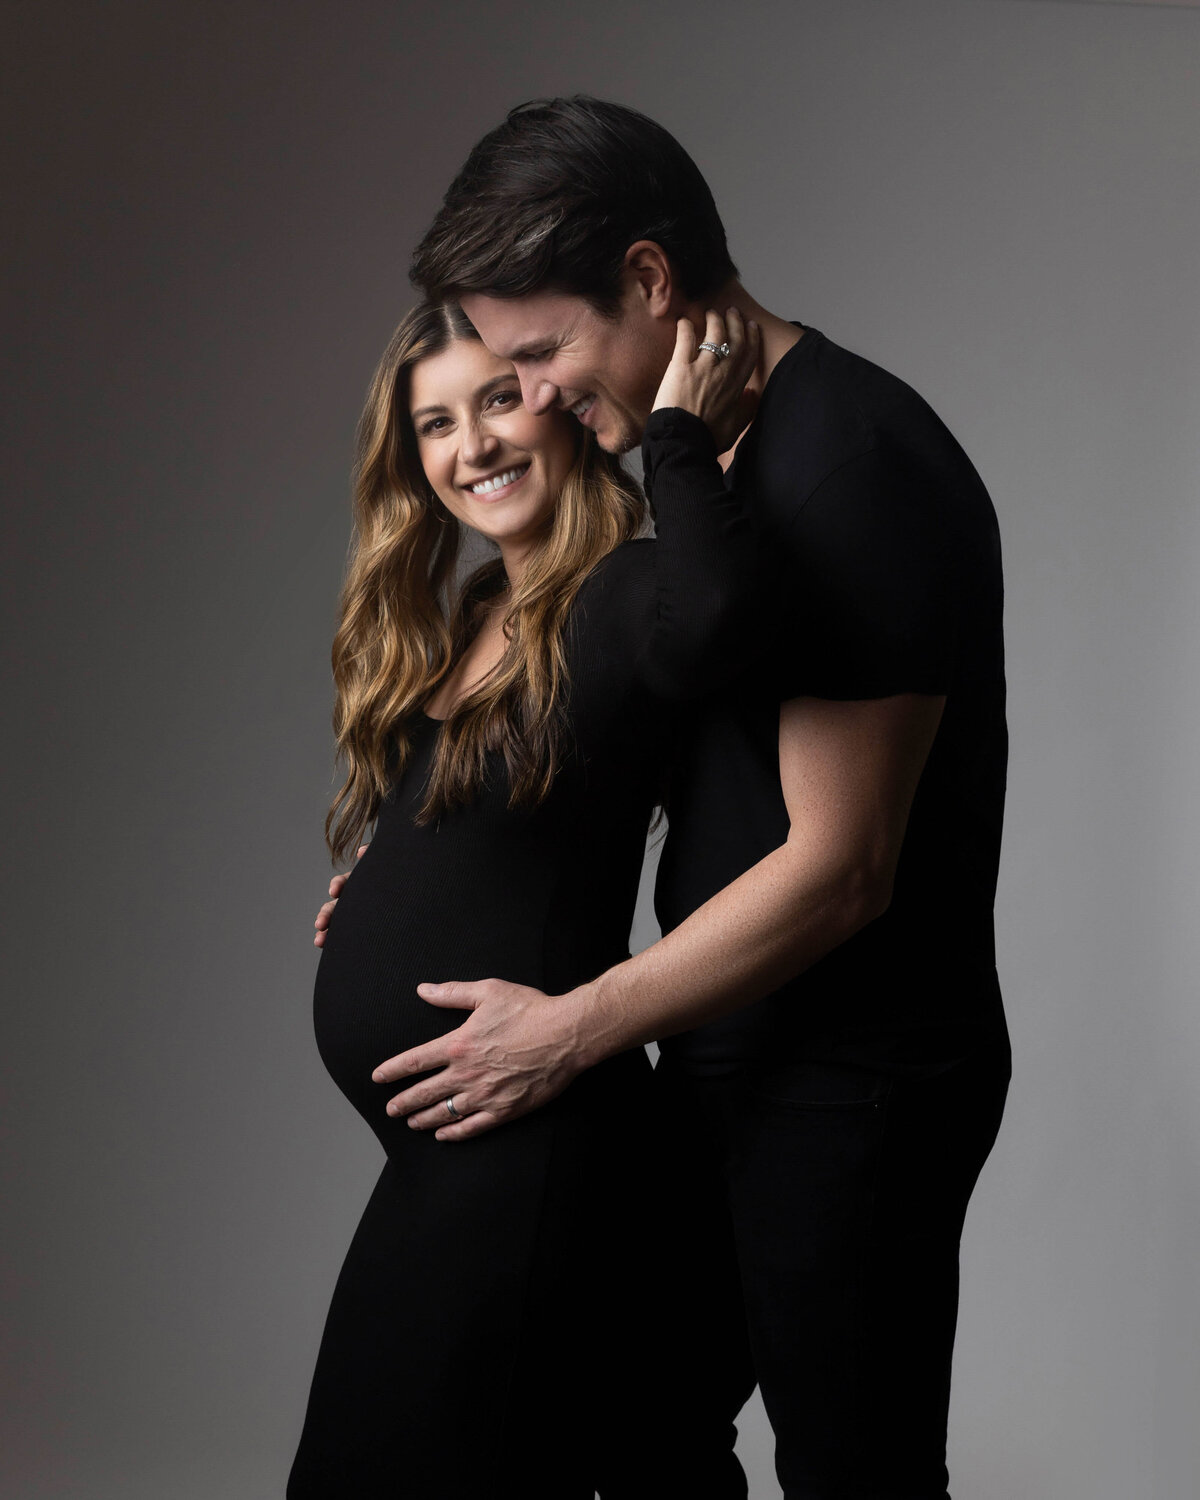 Timeless couple maternity portrait by Daisy Rey Photography